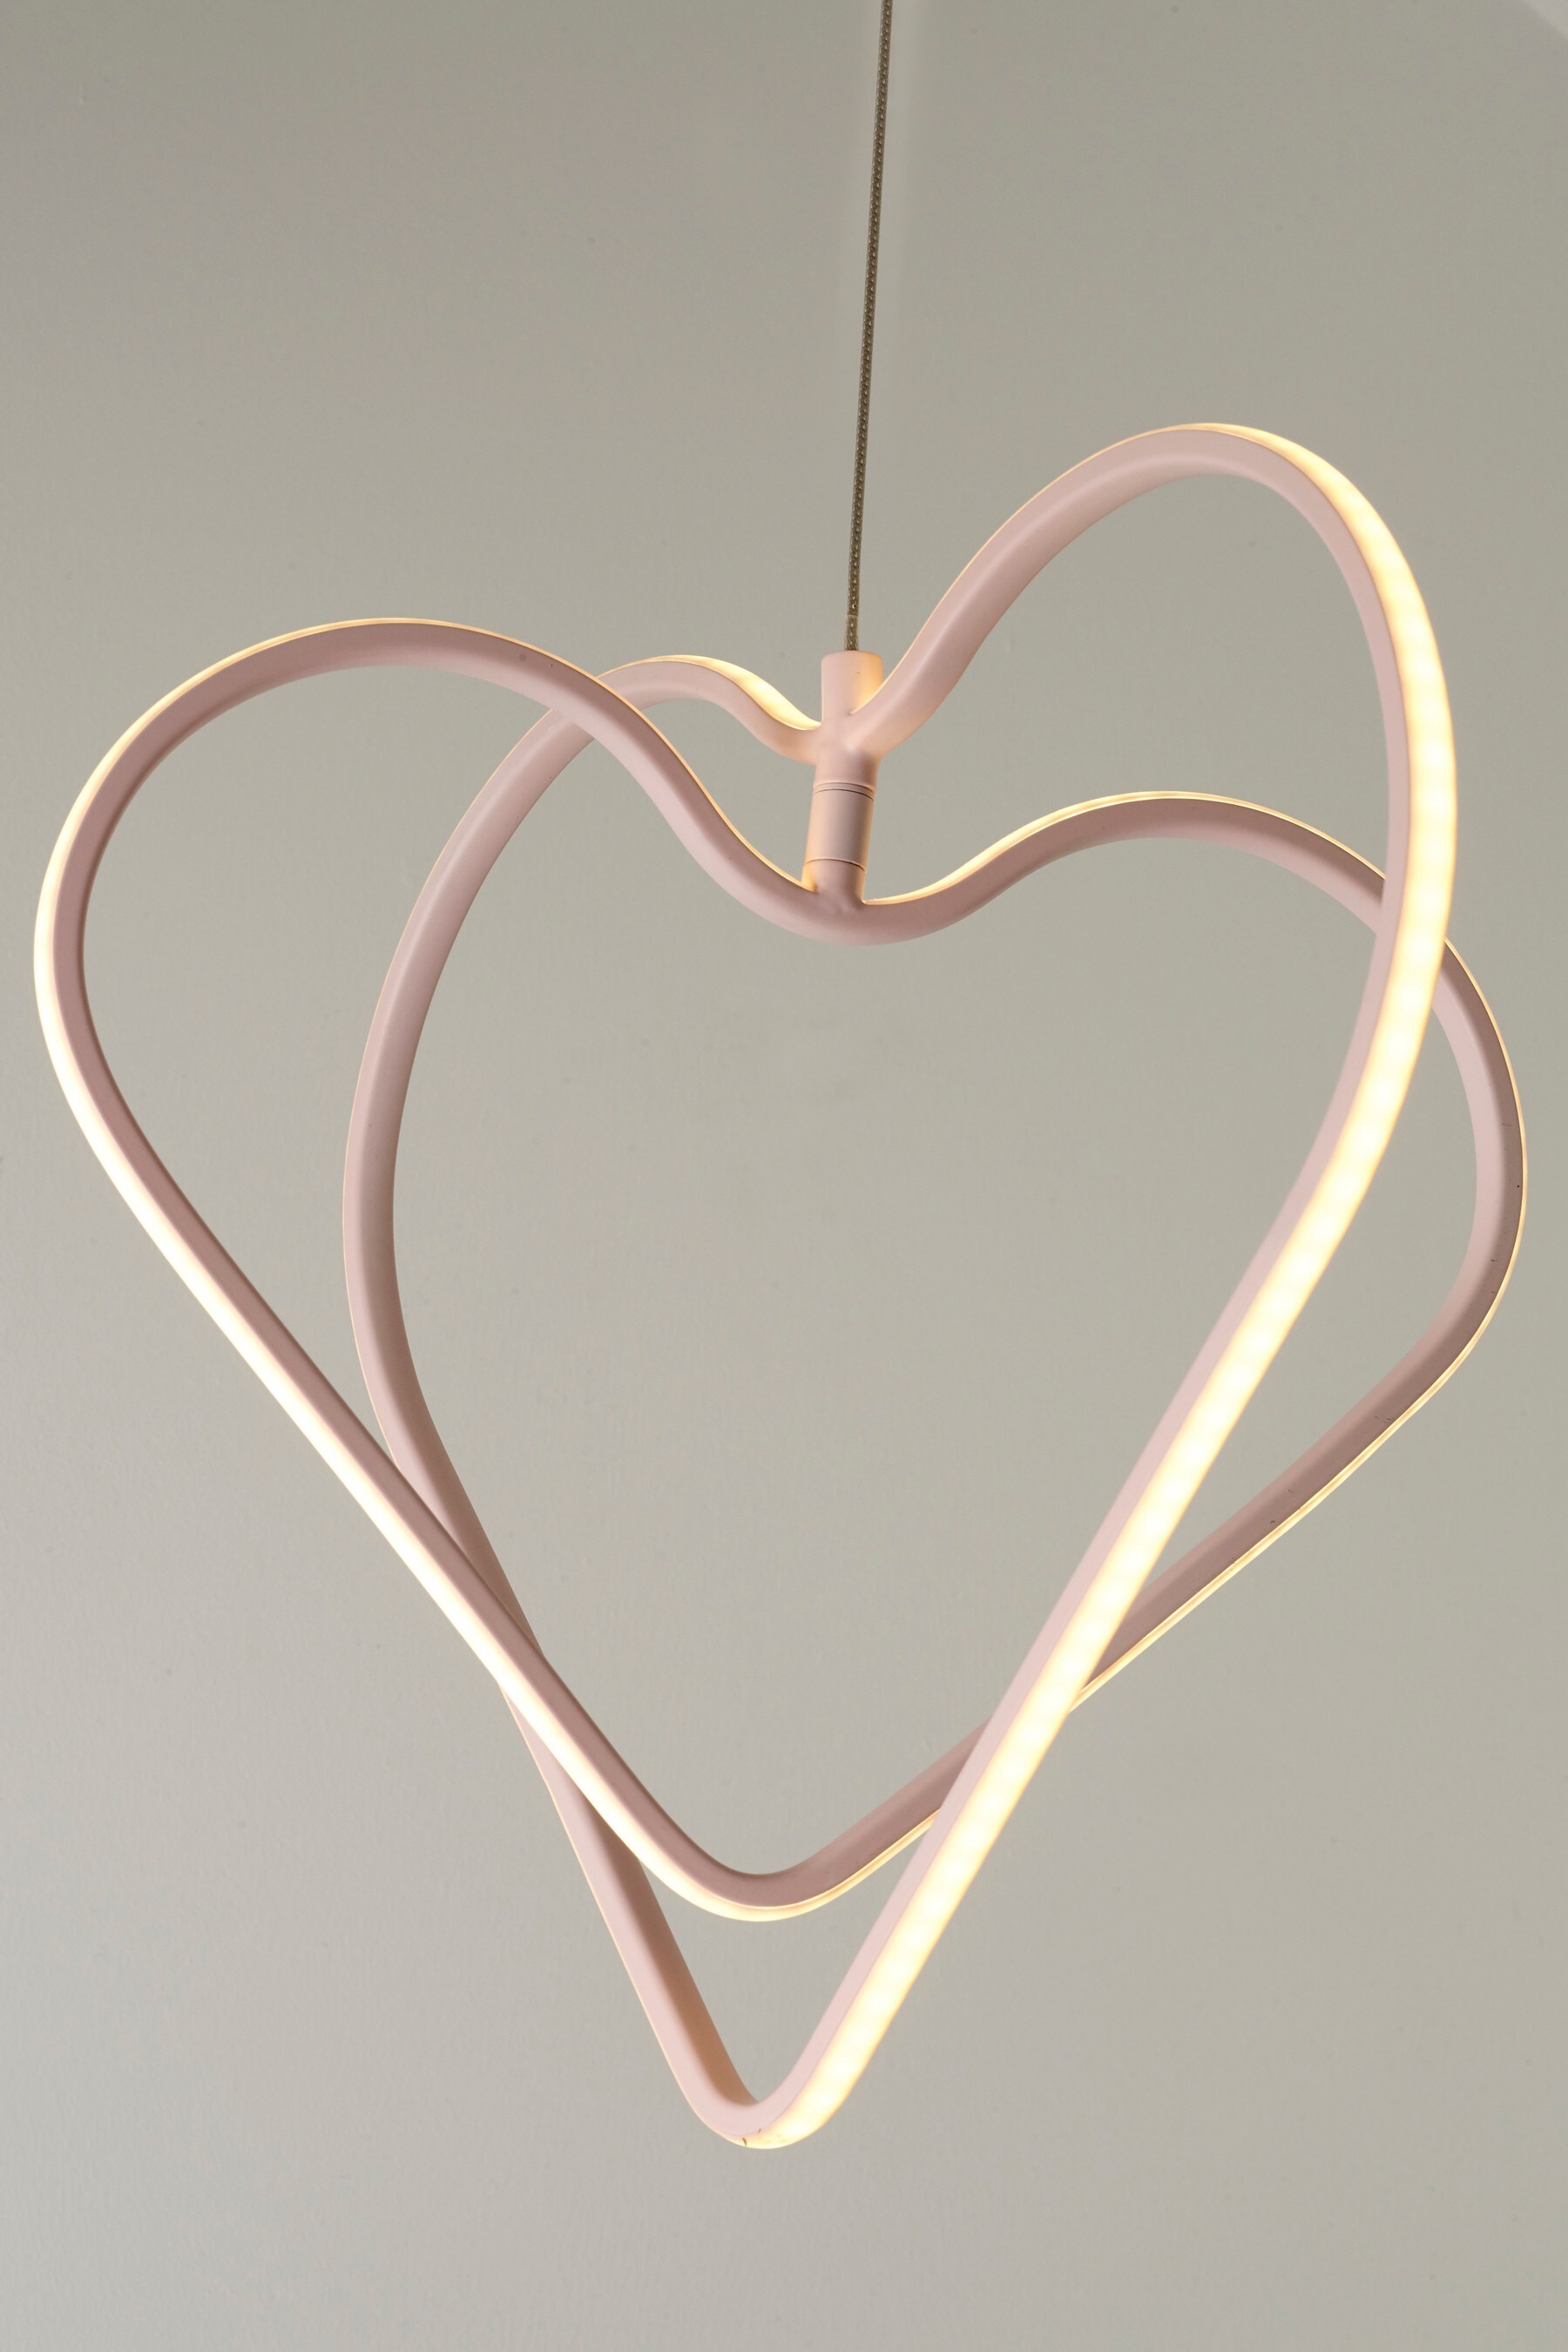 Buy Heart LED Ceiling Light from the Next UK online shop